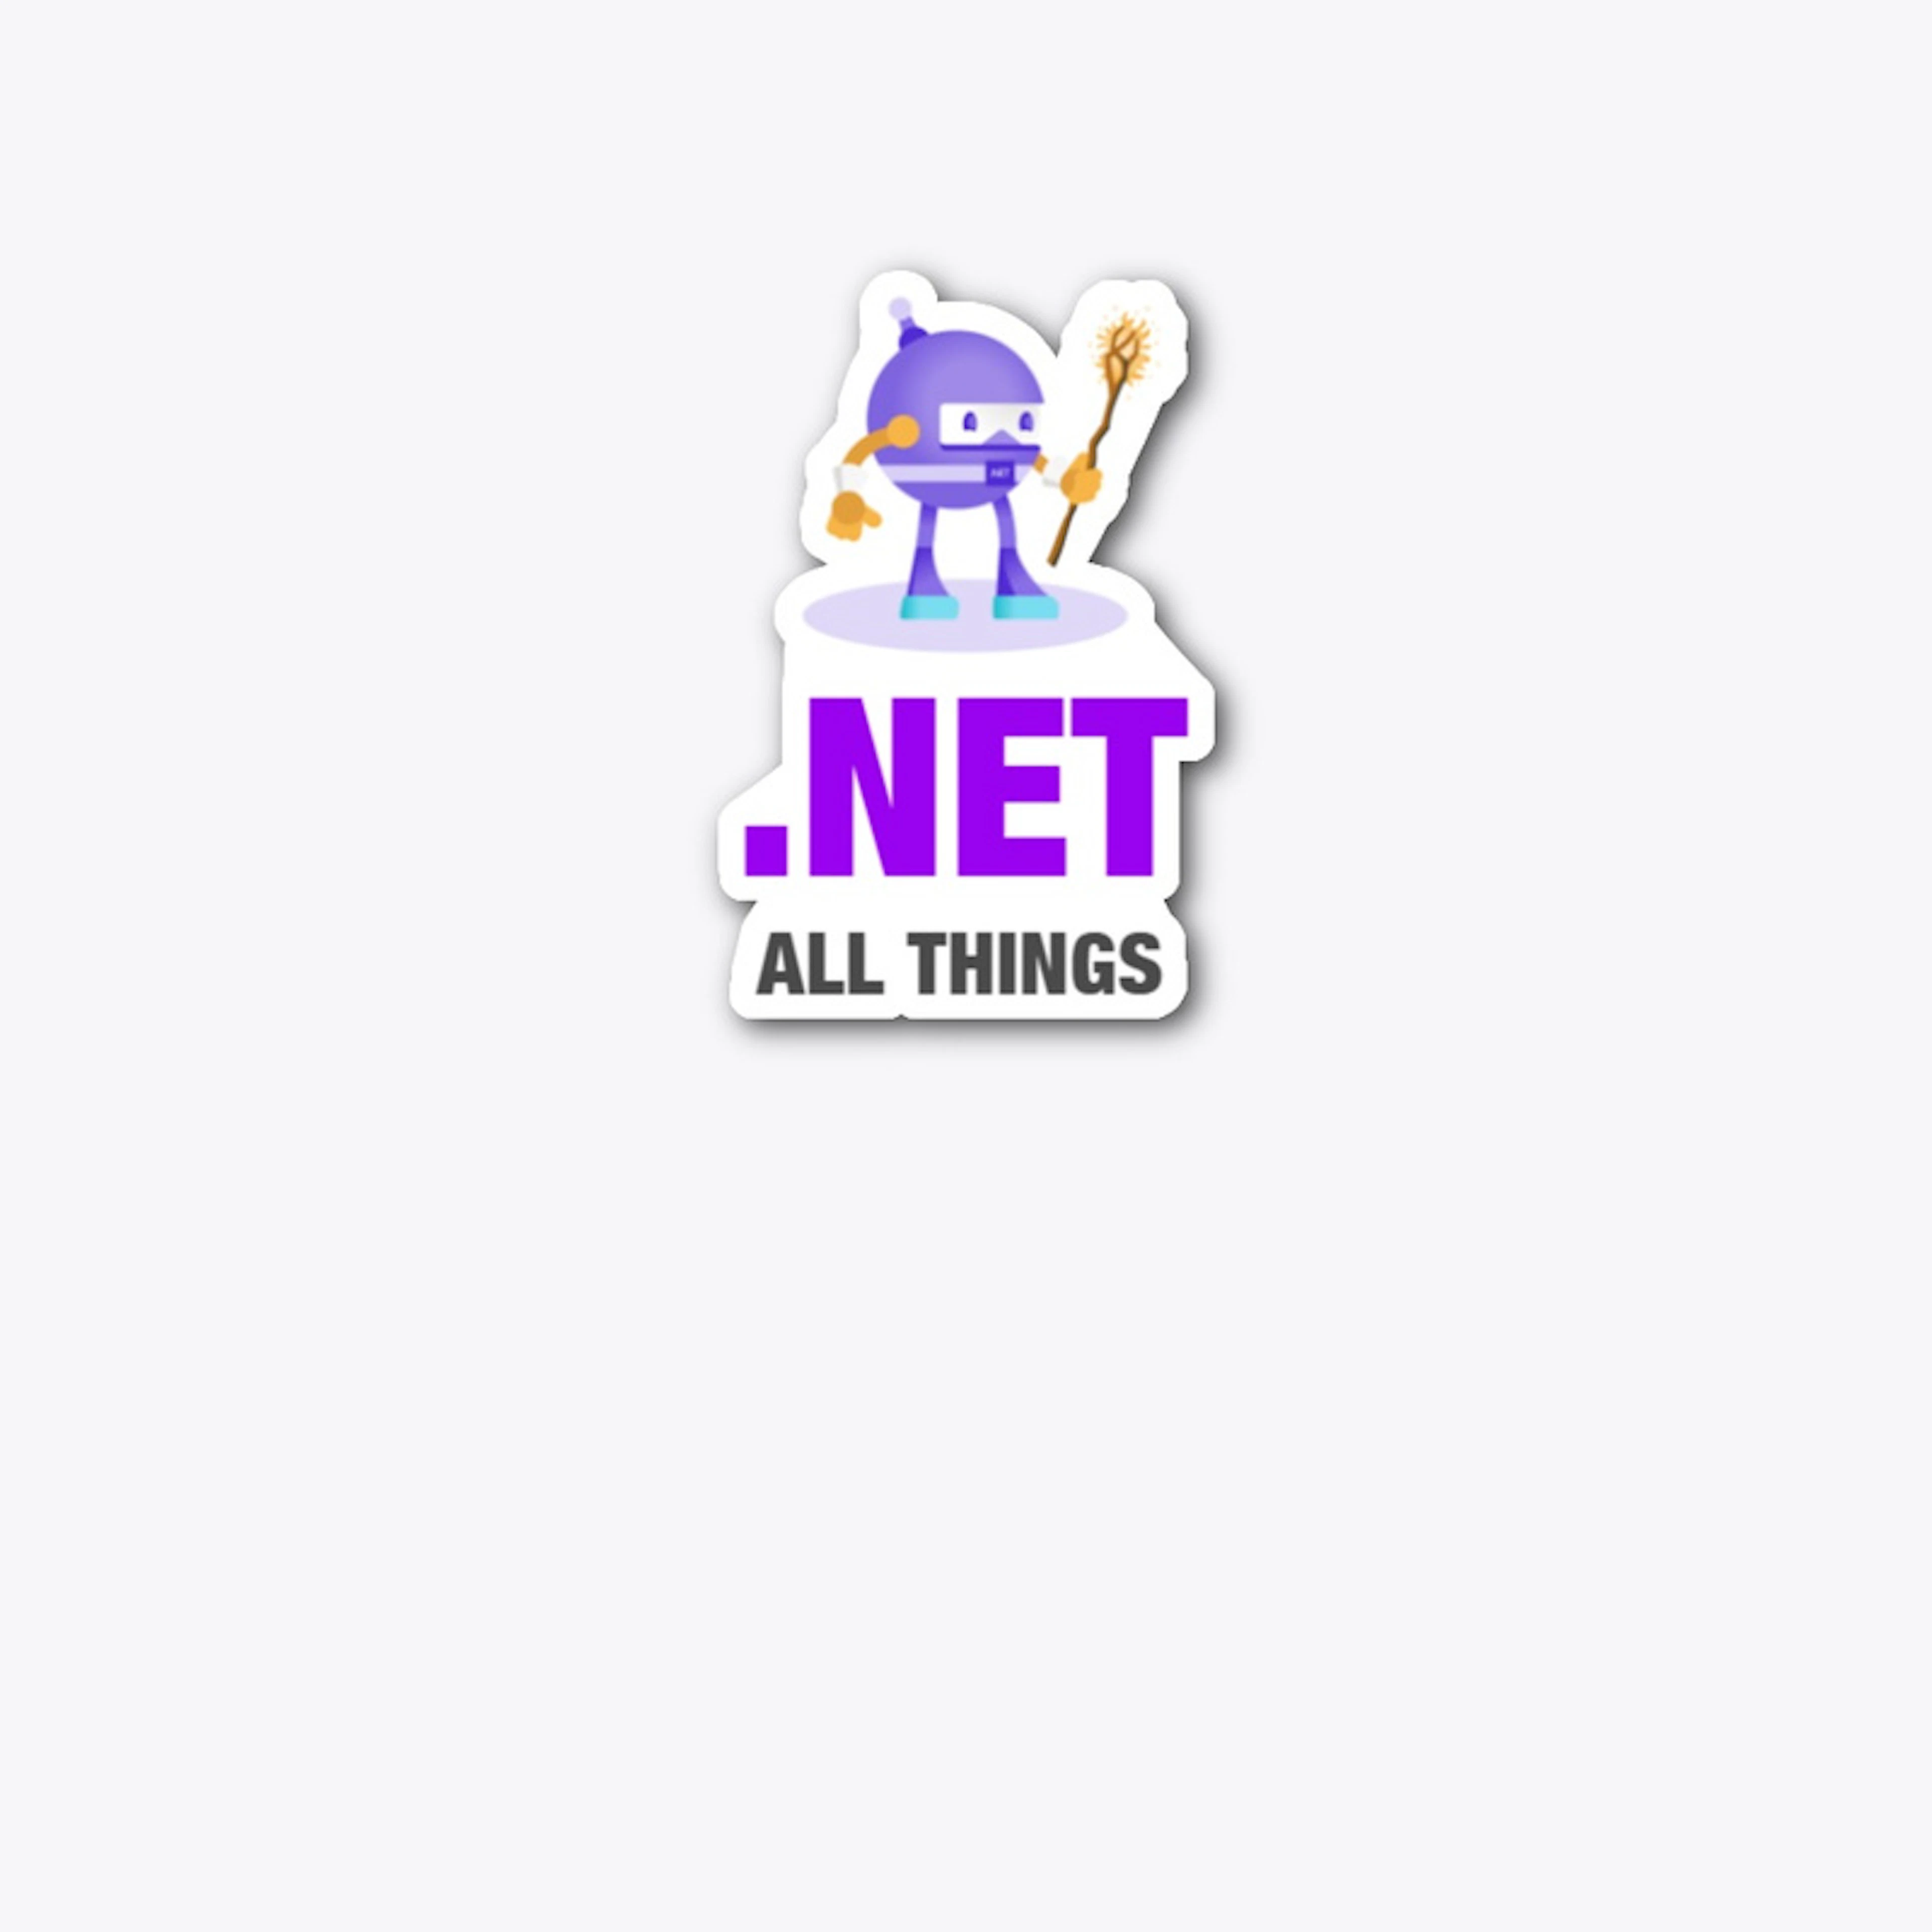 .NET all things